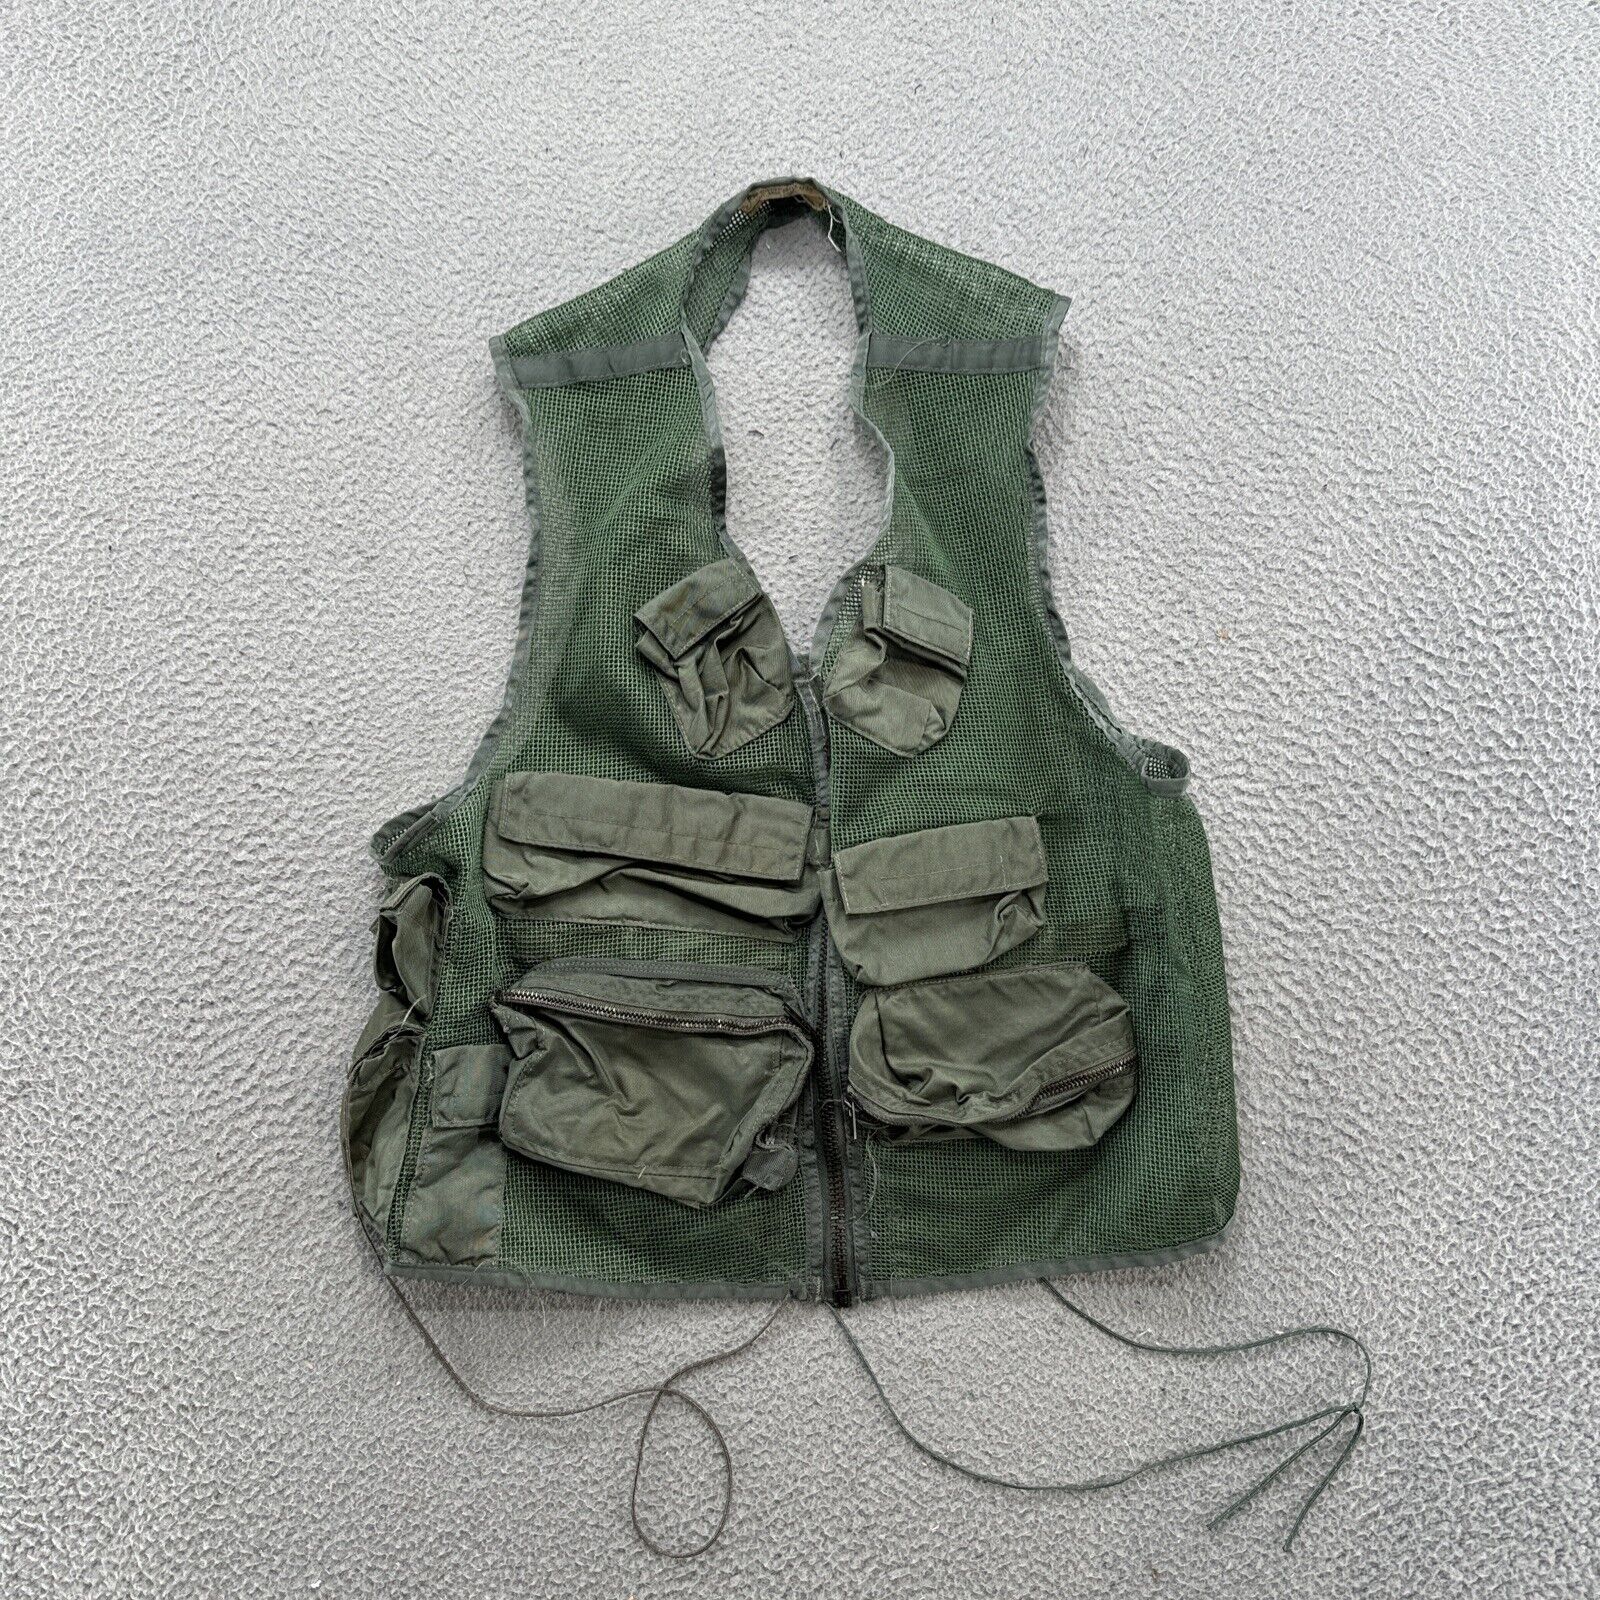 Vintage Greenbrier Military Mesh Survival Vest in Size Large Green Read